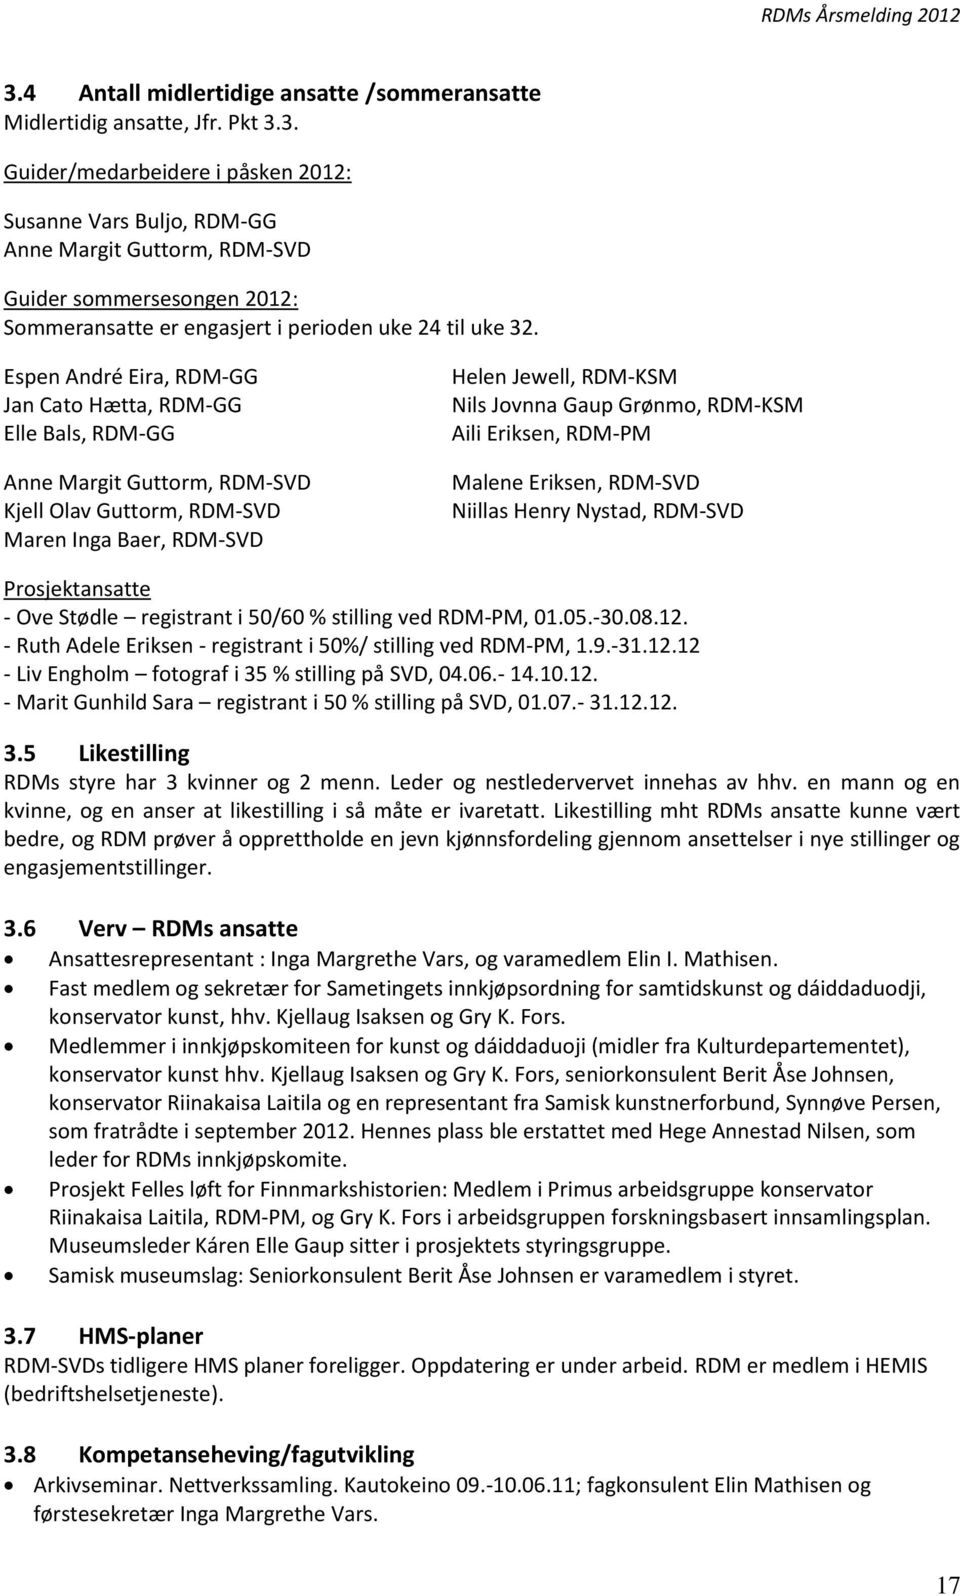 RDM-KSM Aili Eriksen, RDM-PM Malene Eriksen, RDM-SVD Niillas Henry Nystad, RDM-SVD Prosjektansatte - Ove Stødle registrant i 50/60 % stilling ved RDM-PM, 01.05.-30.08.12.